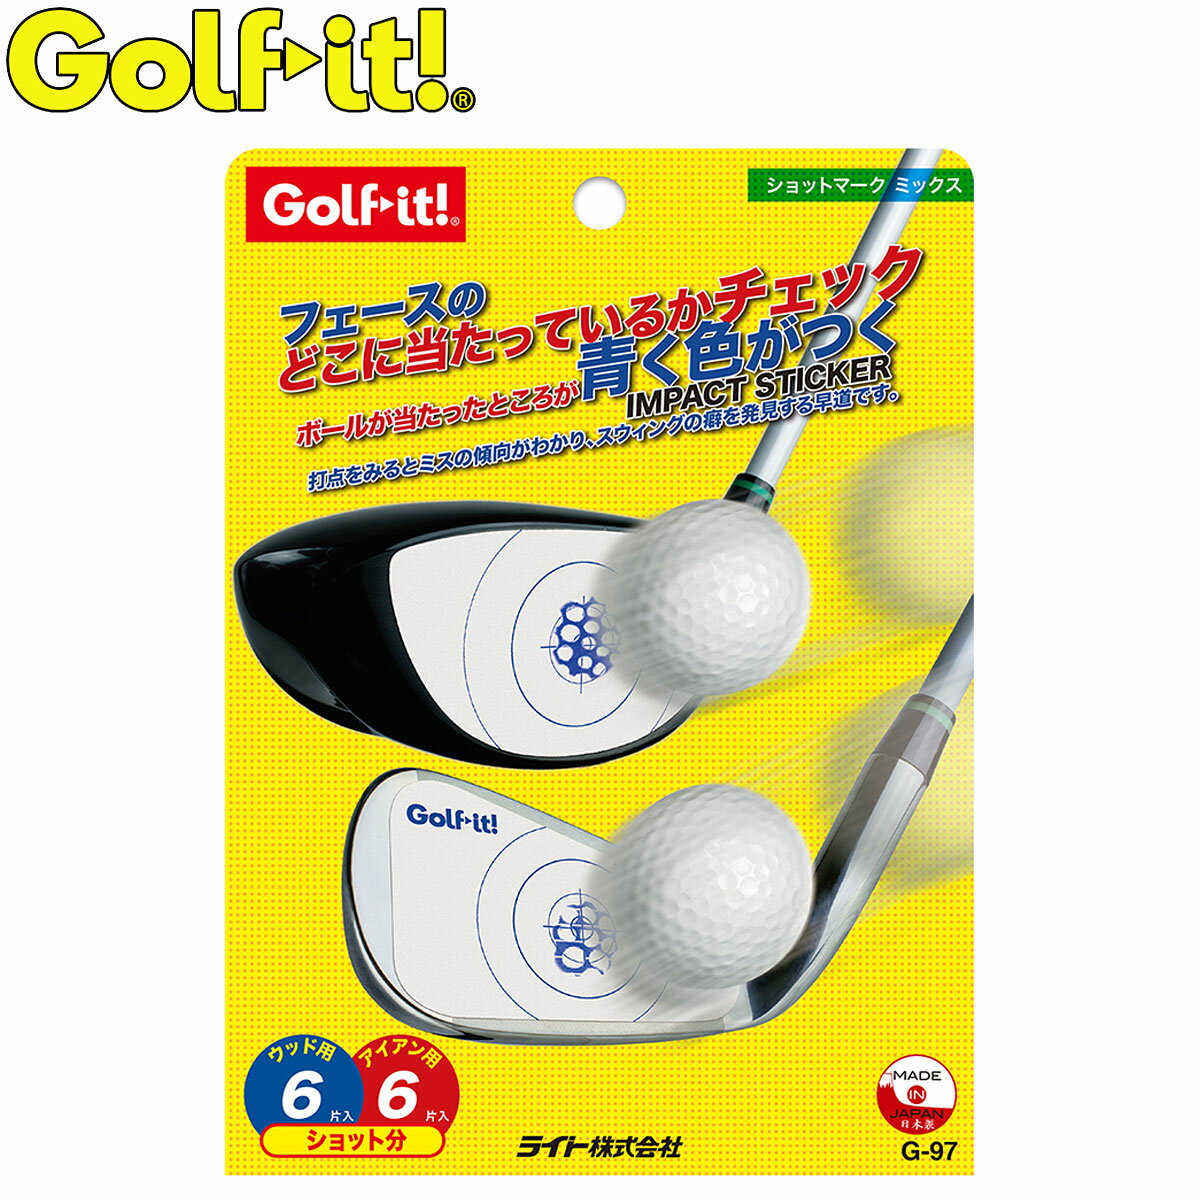 Golfit! ゴルフイット ライト正規品 ショットマーク ミックス (ウッド用＆アイアン用) 「G-97」 「ゴルフスイング練習用品」